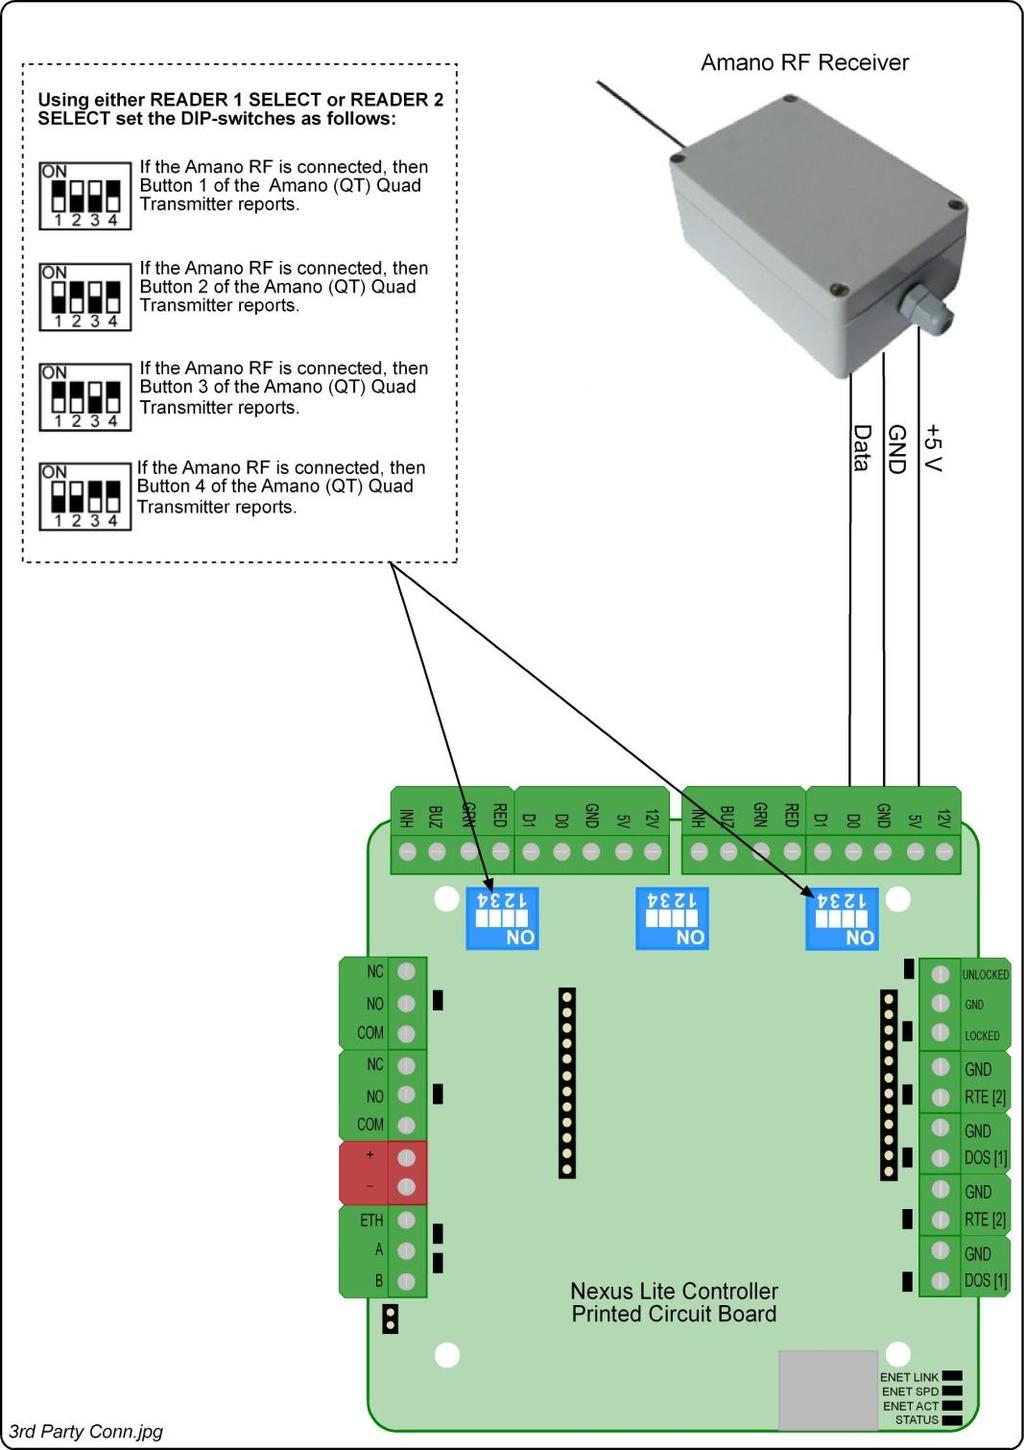 Figure 6: Nexus Lite Controller connected to